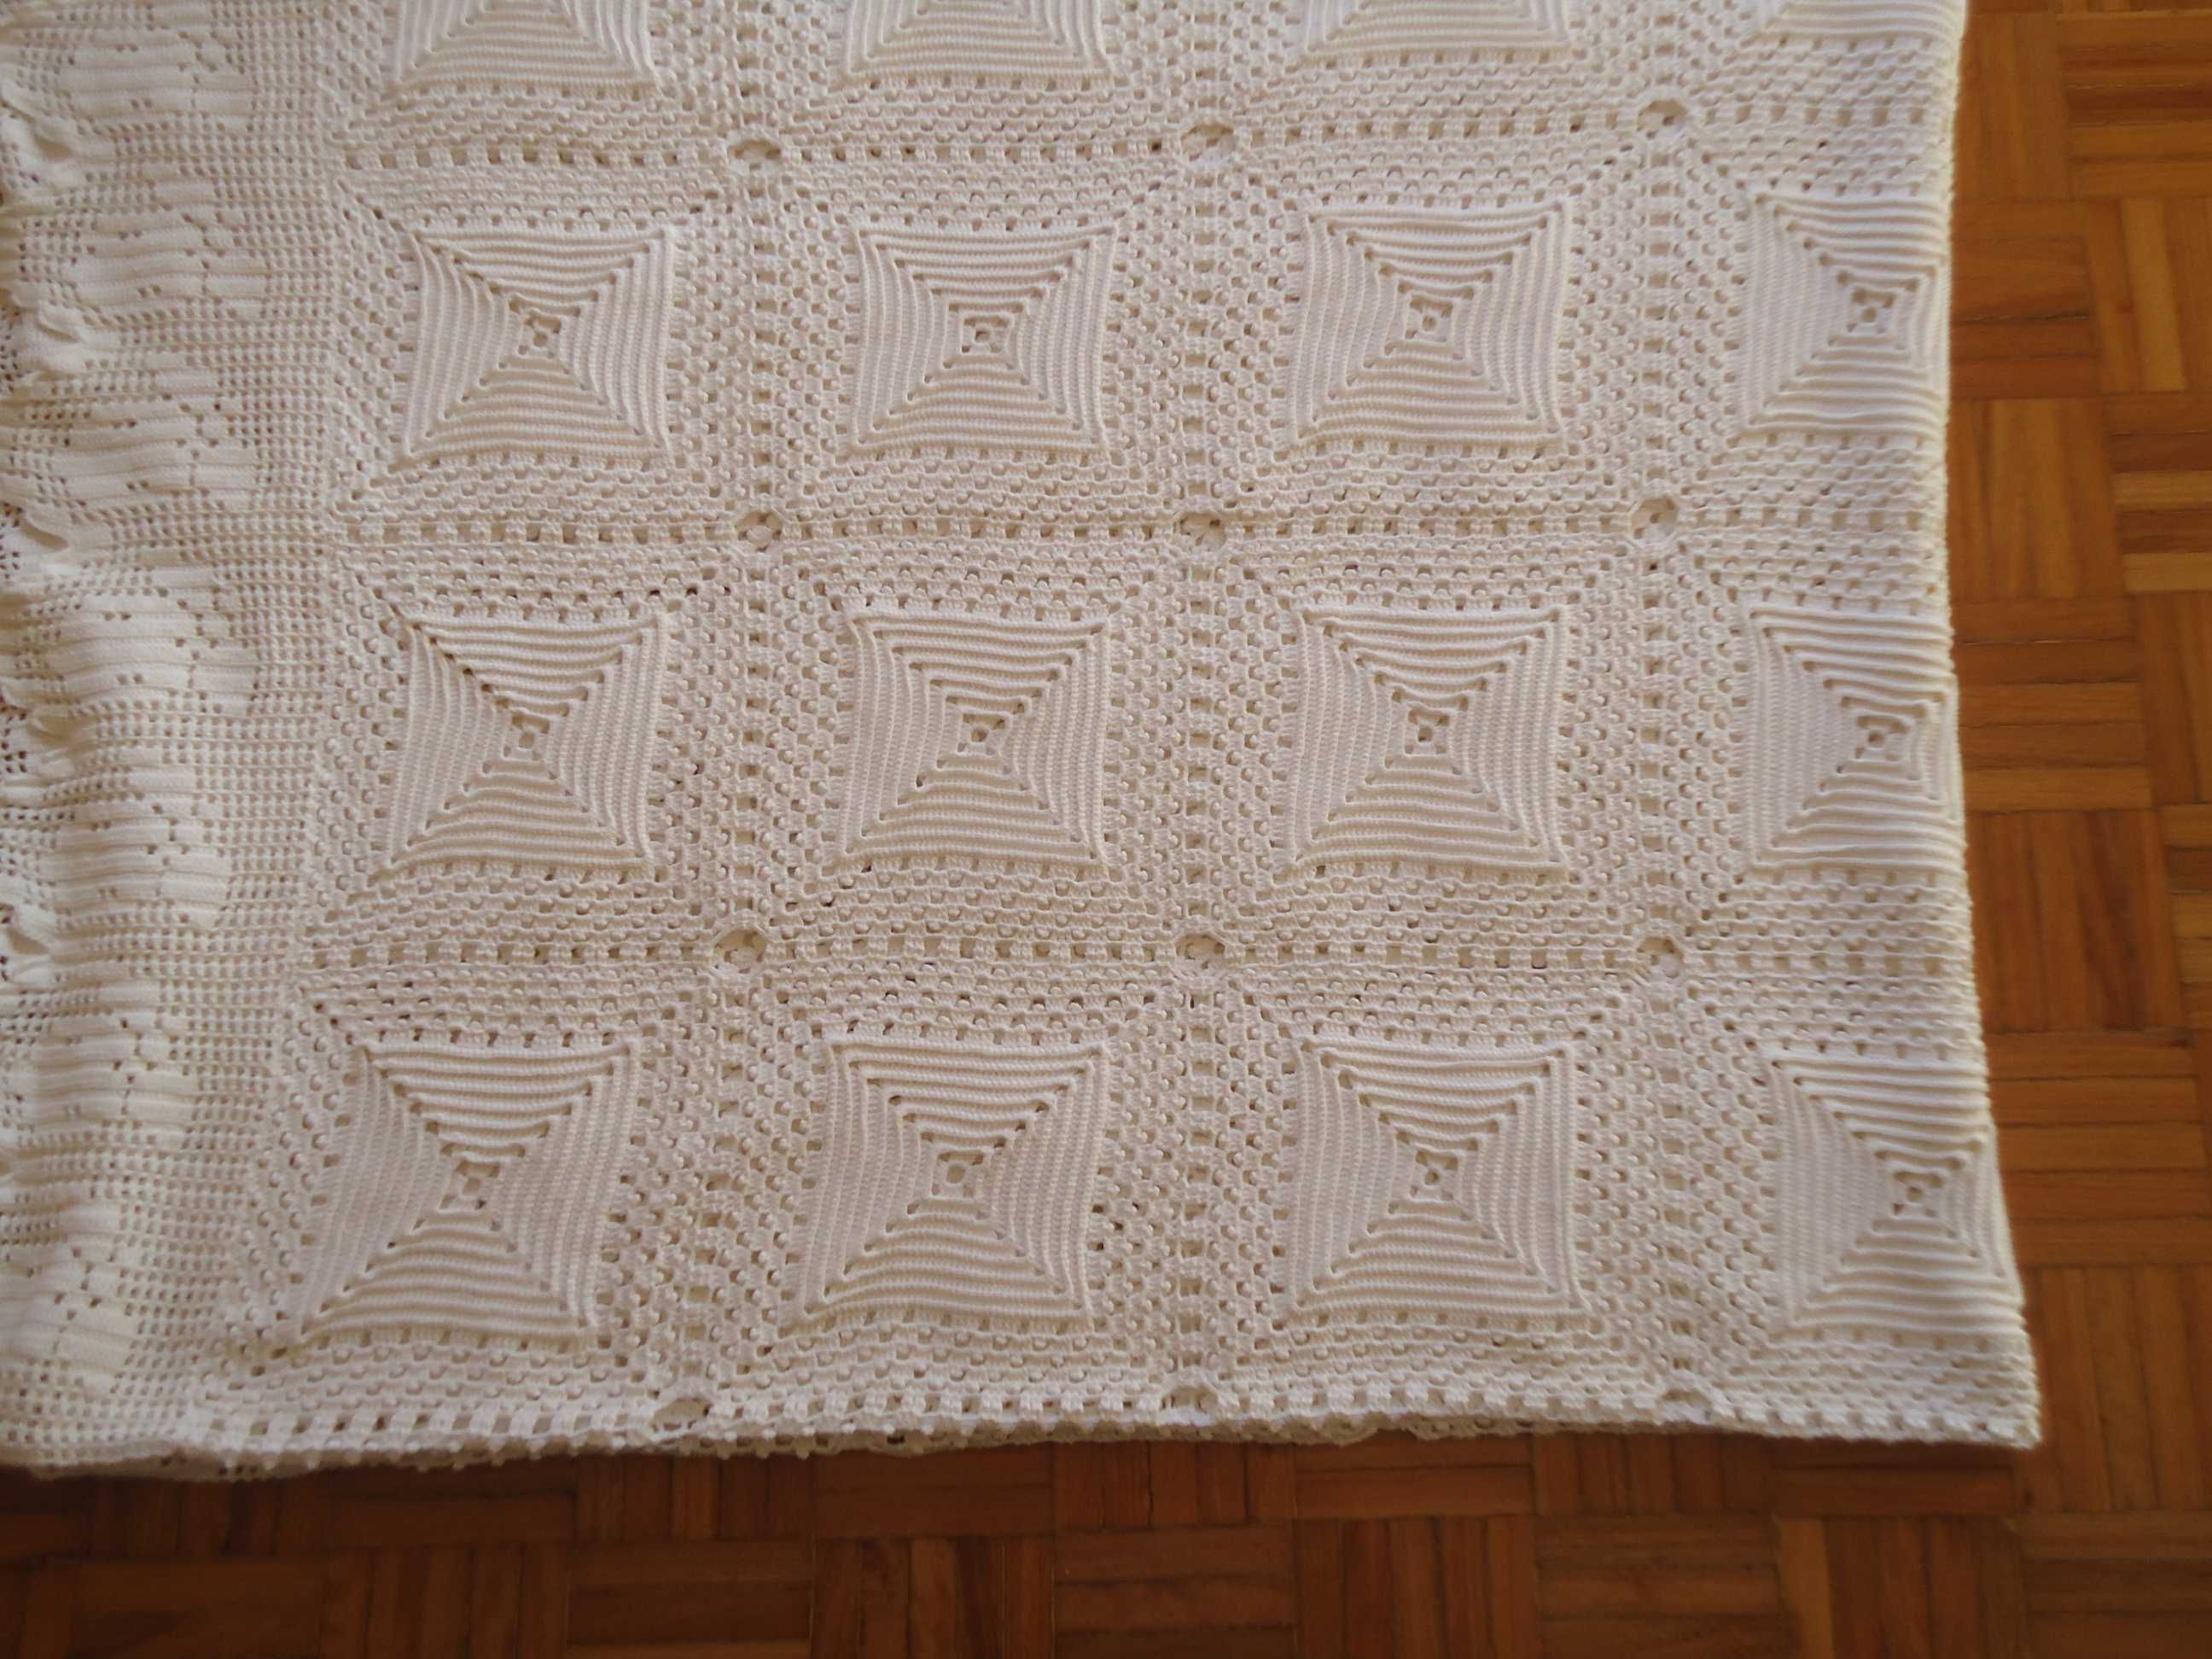 Coberta Cama de Casal em Crochet